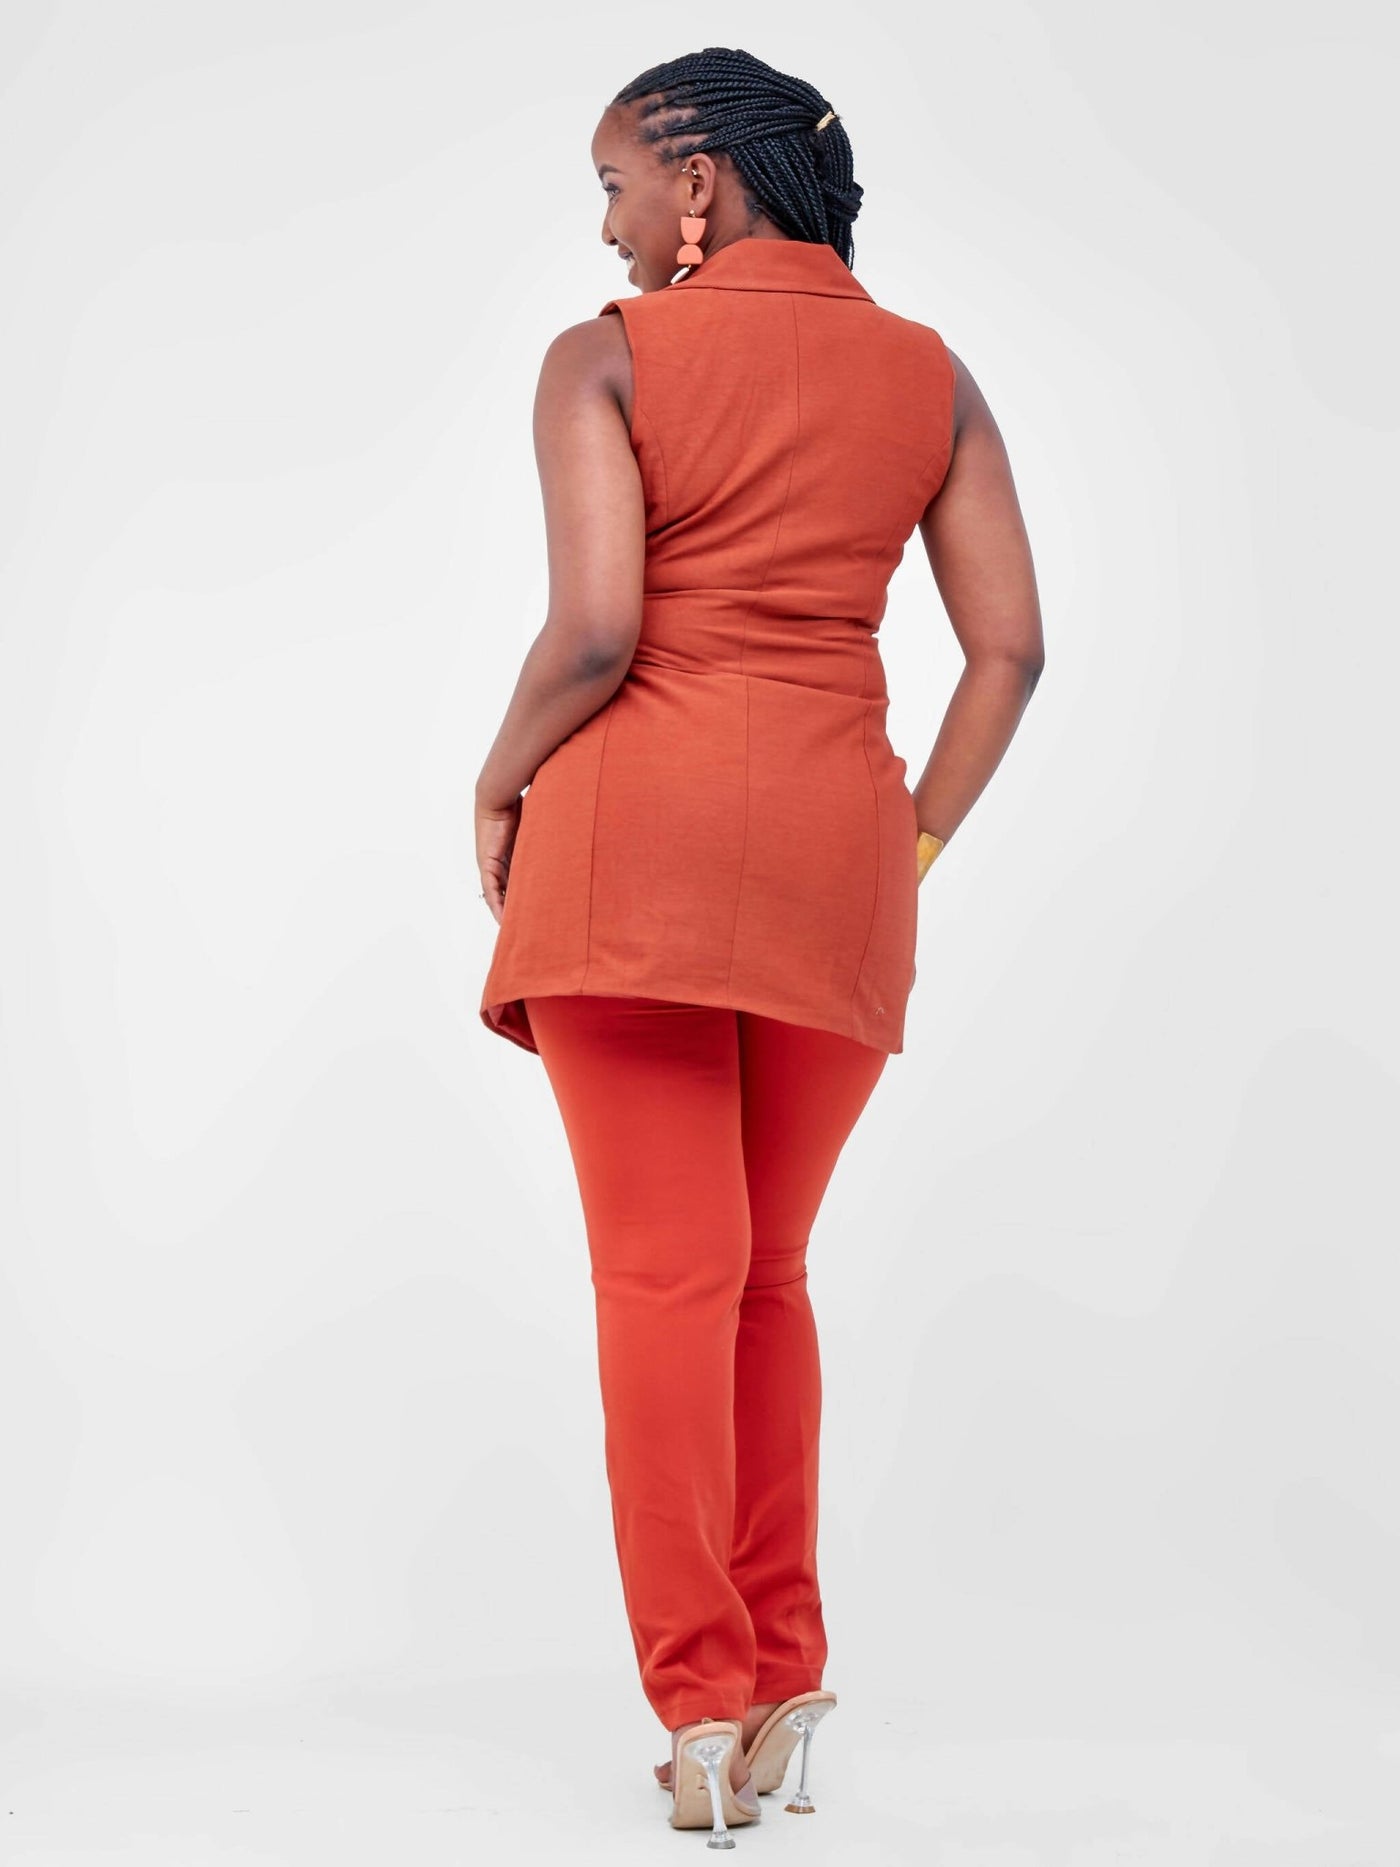 The Fashion Frenzy Suit - Red Rust - Shop Zetu Kenya